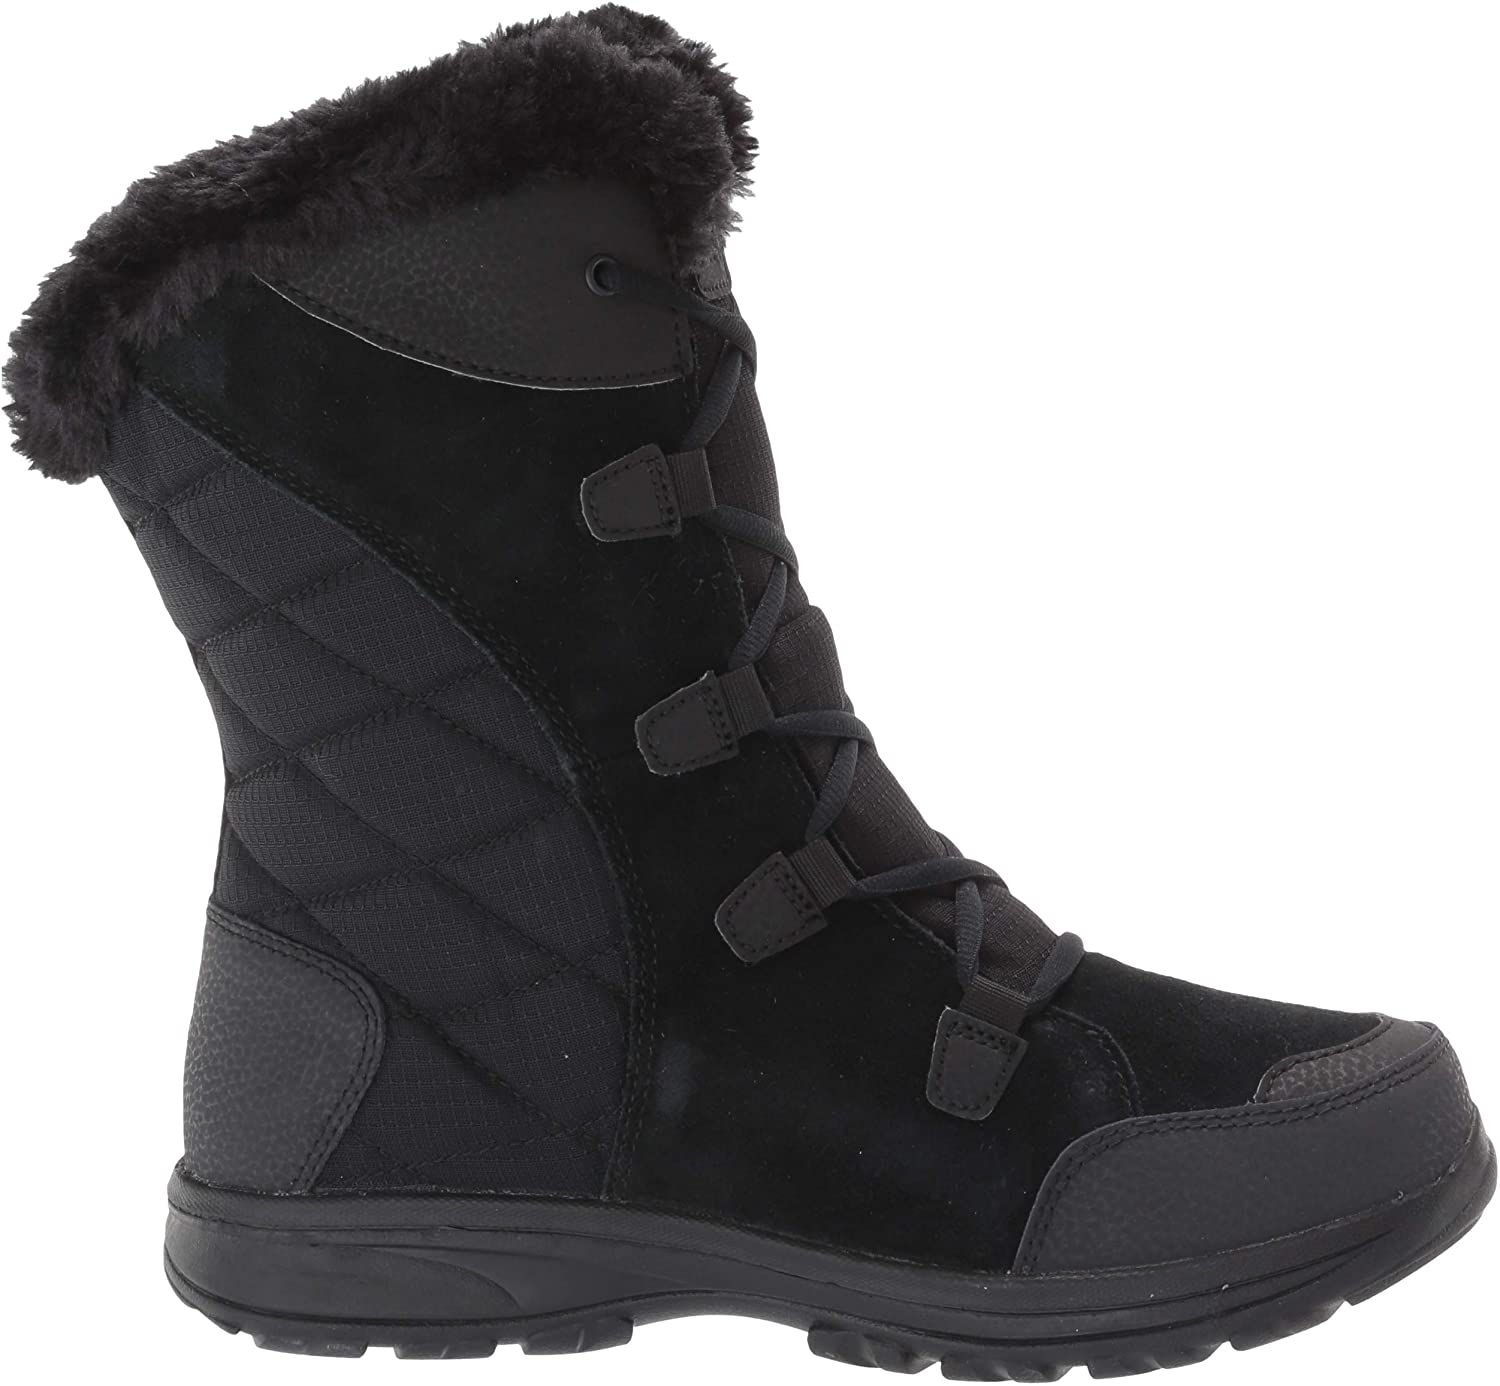 Columbia Ice Maiden II Waterproof Leather Snow Boots